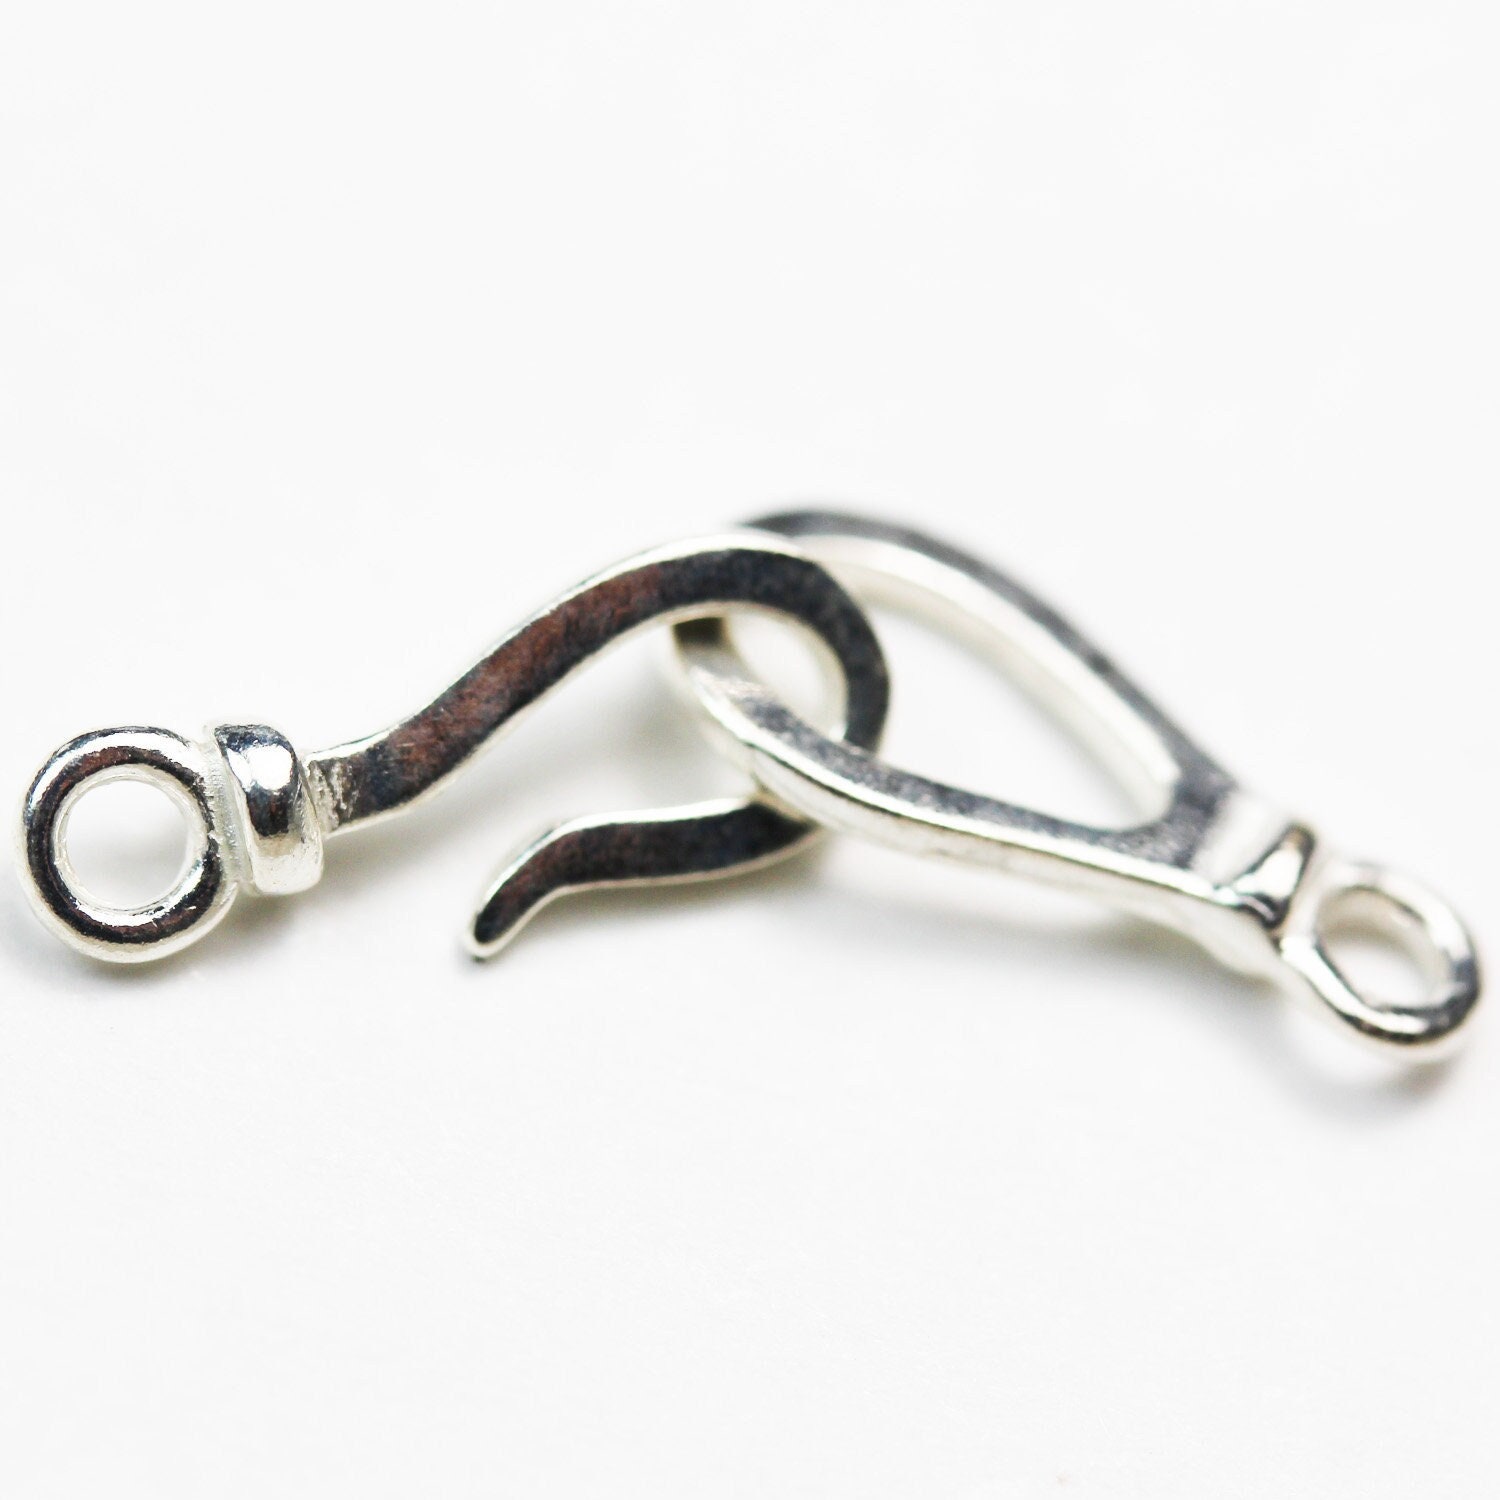 Sterling Silver 925 Revolving Hook and Eye clasp (hook 23mm; eye